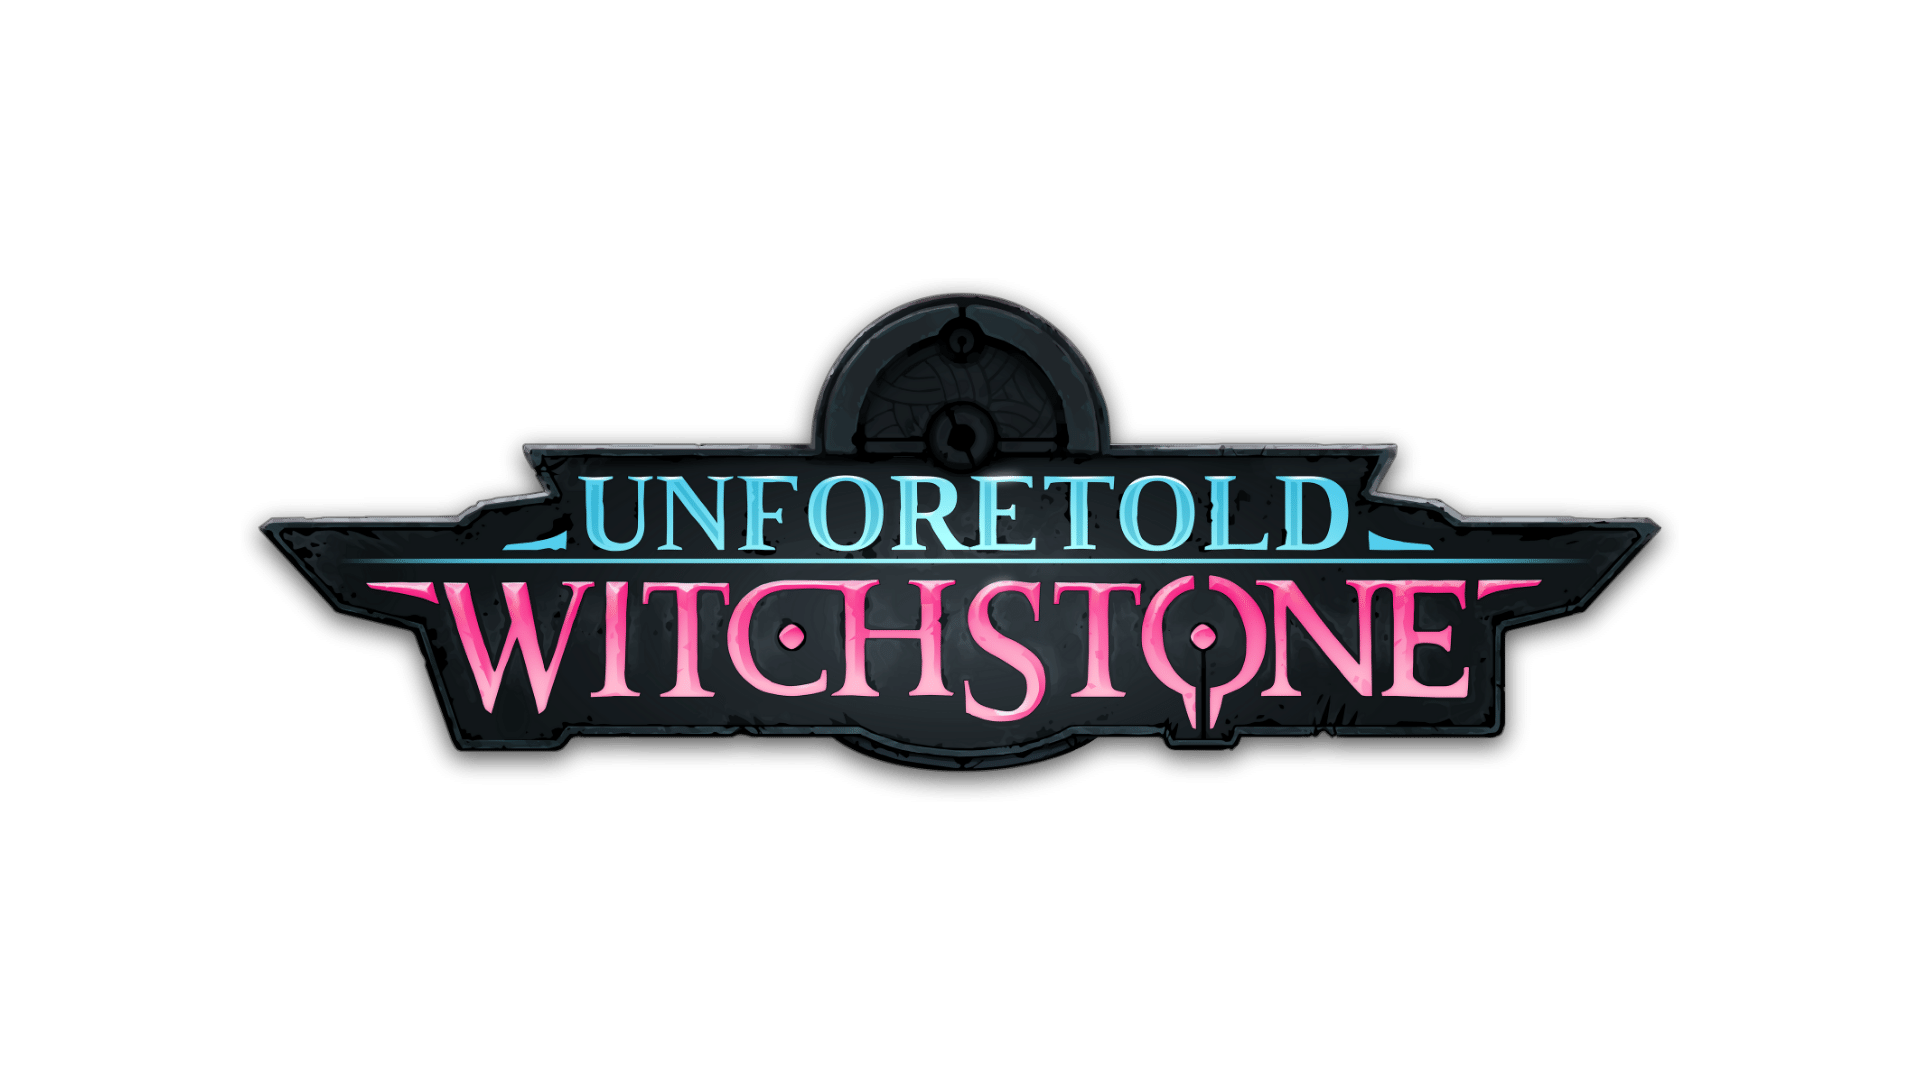 Unforetold witchstone